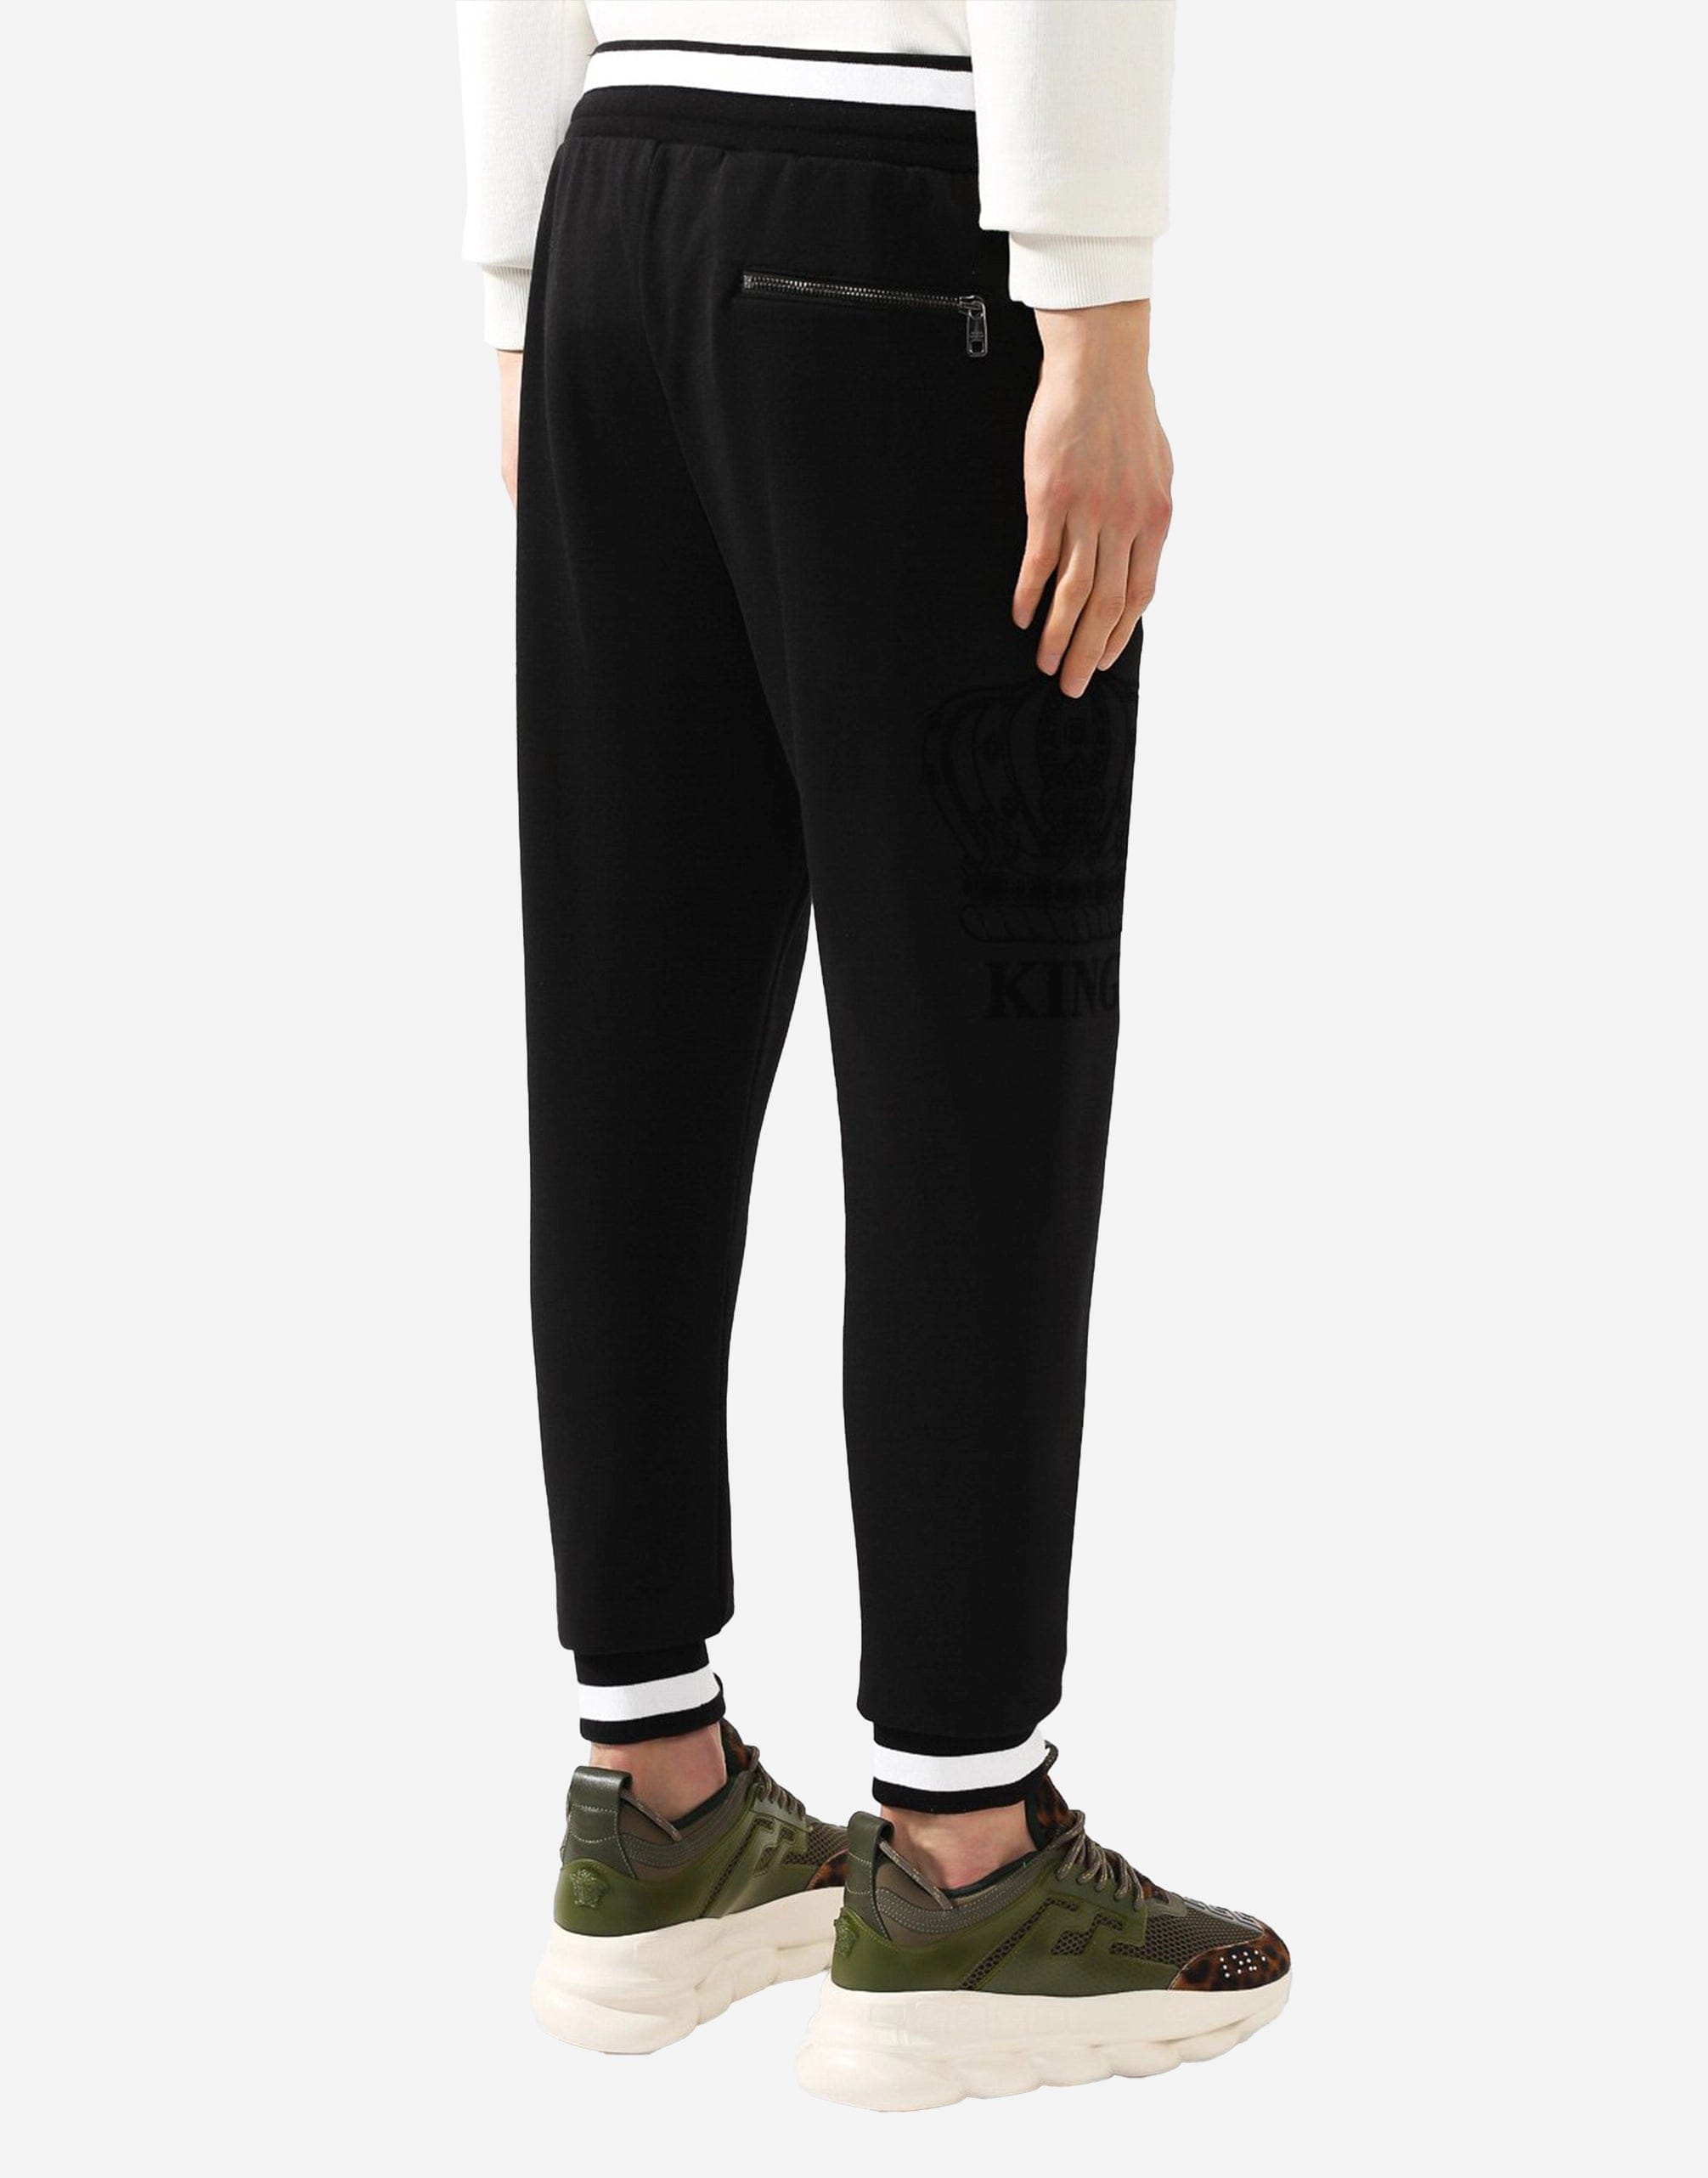 Black Cotton Logo Sweatpants Jogging Pants